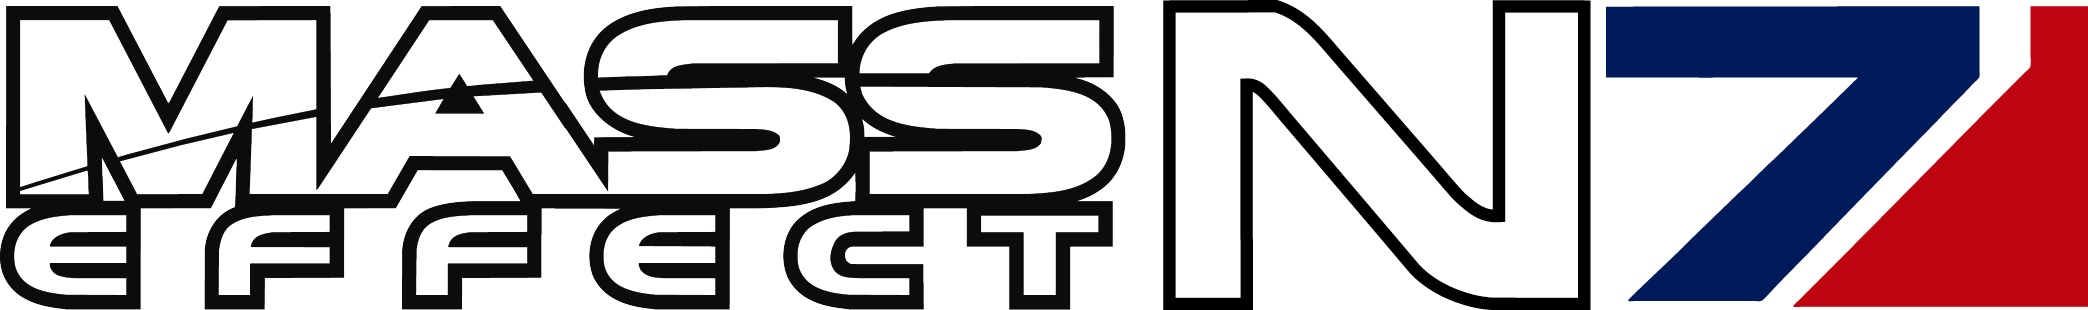 Mass Effect Logo Transparent Background PNG Image